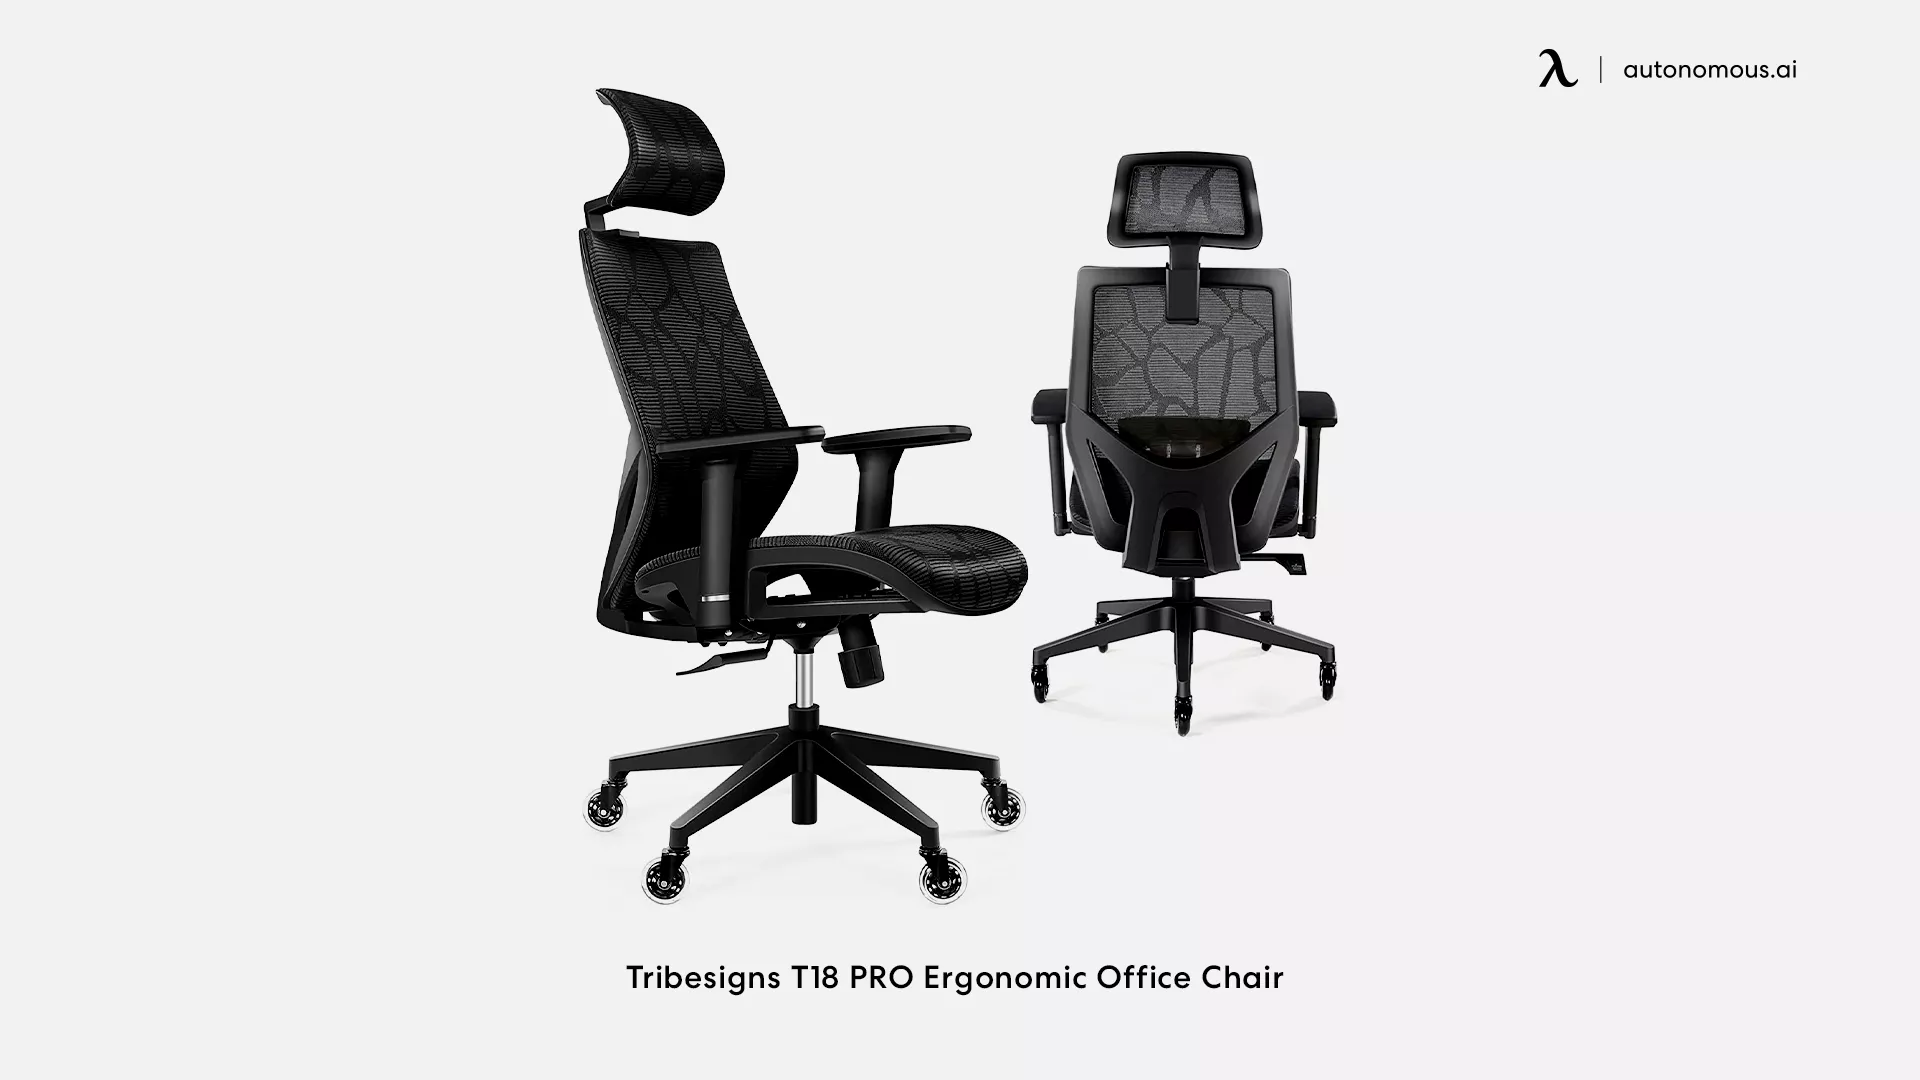 Tribesigns T18 PRO Ergonomic Office Chair